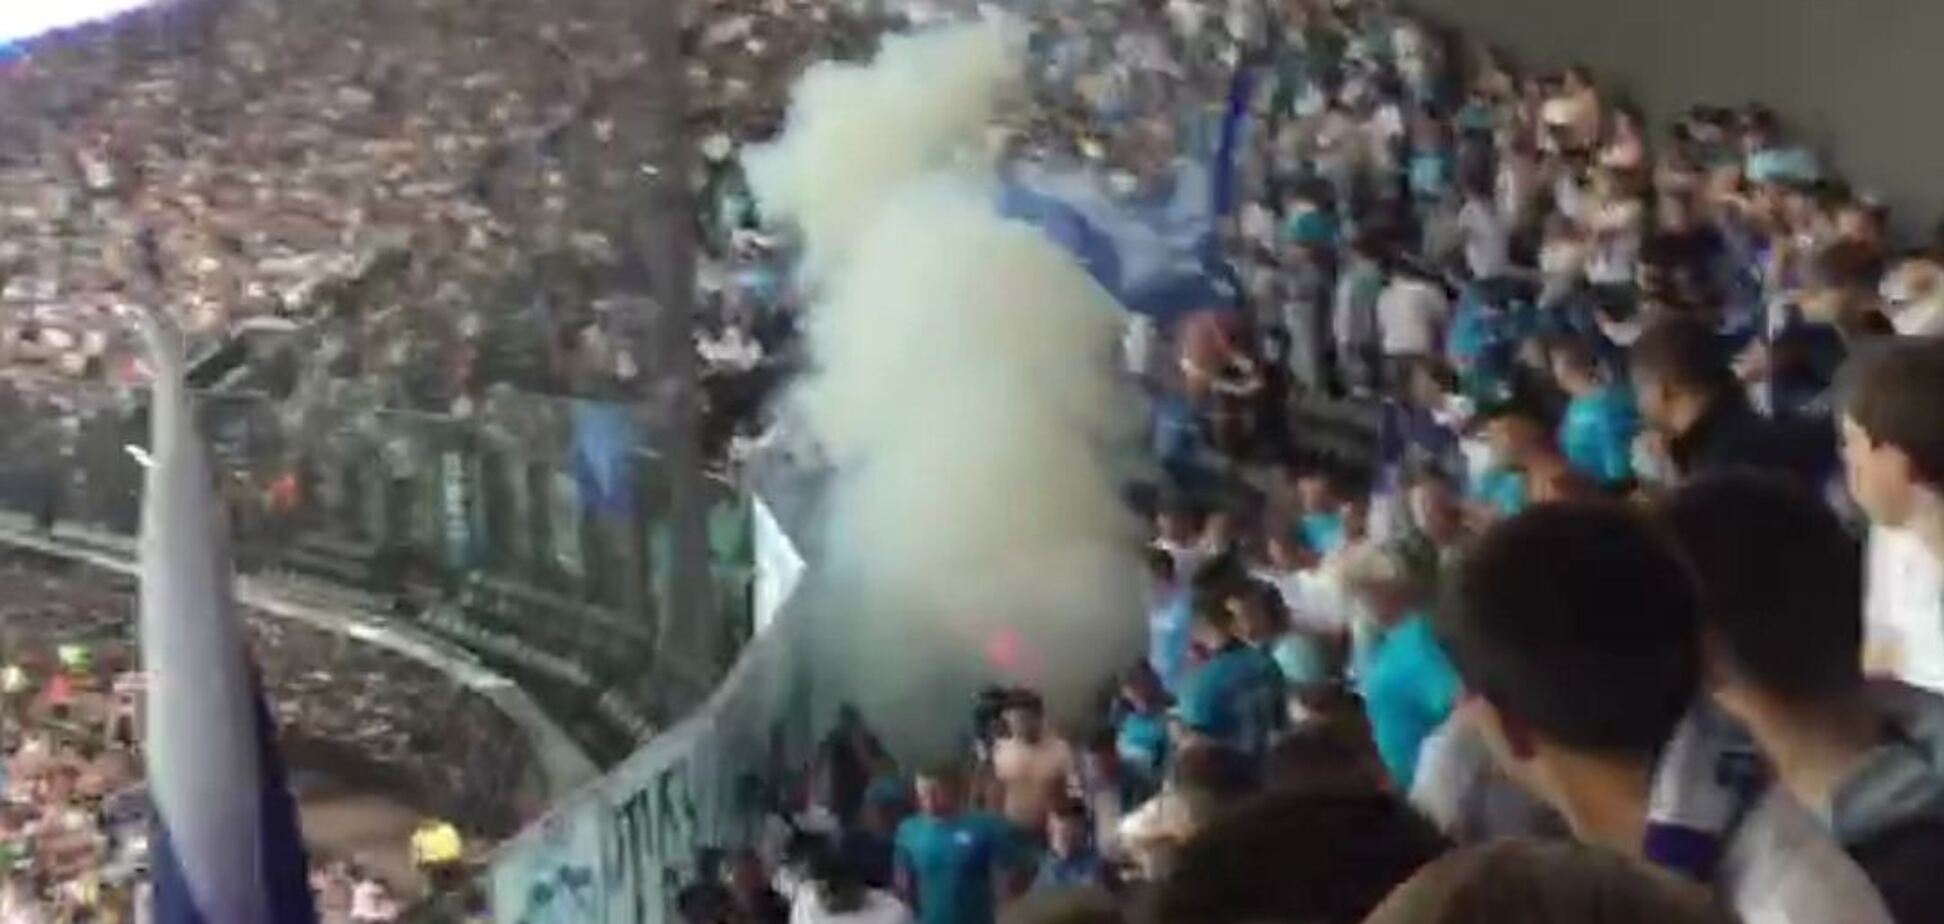 Российские фанаты в знак протеста подожгли стадион во время матча: фото и видео инцидента